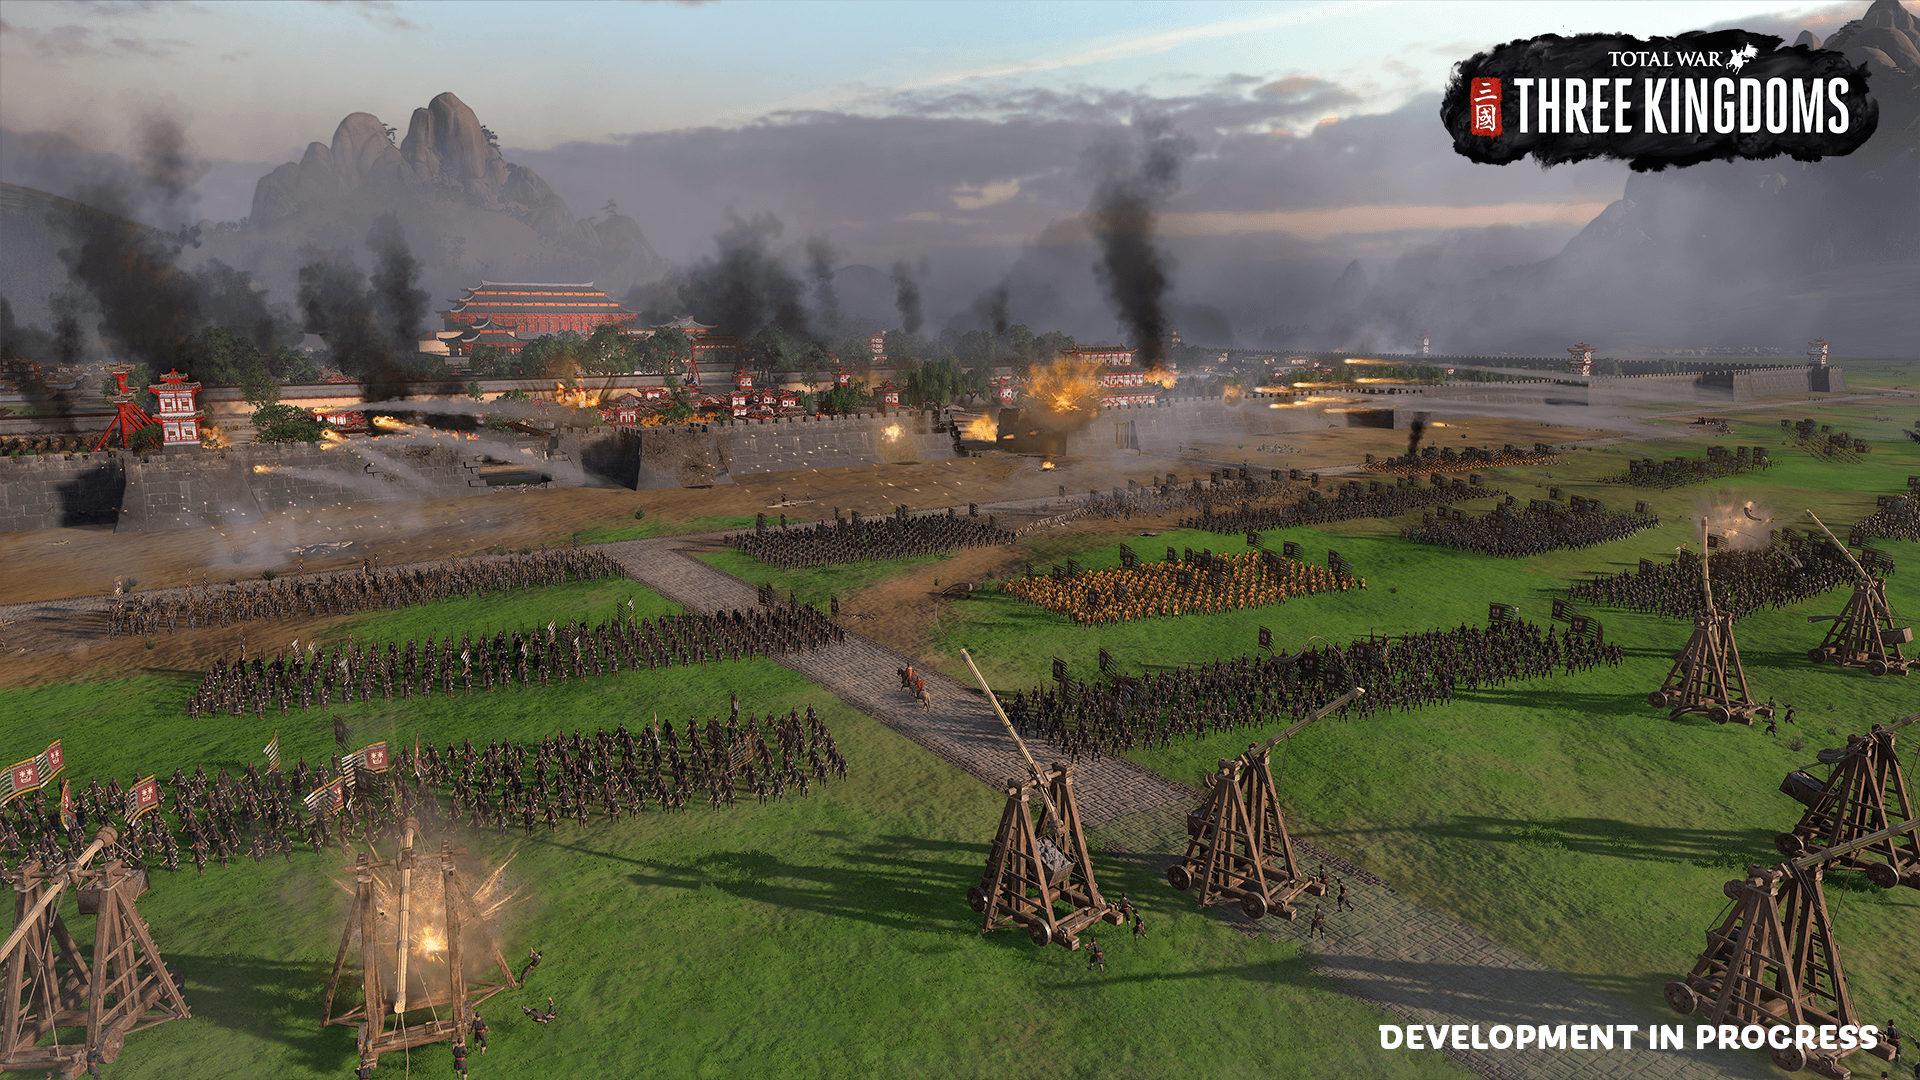 How 'Total War: Three Kingdoms' Aims to Kill the Devil in